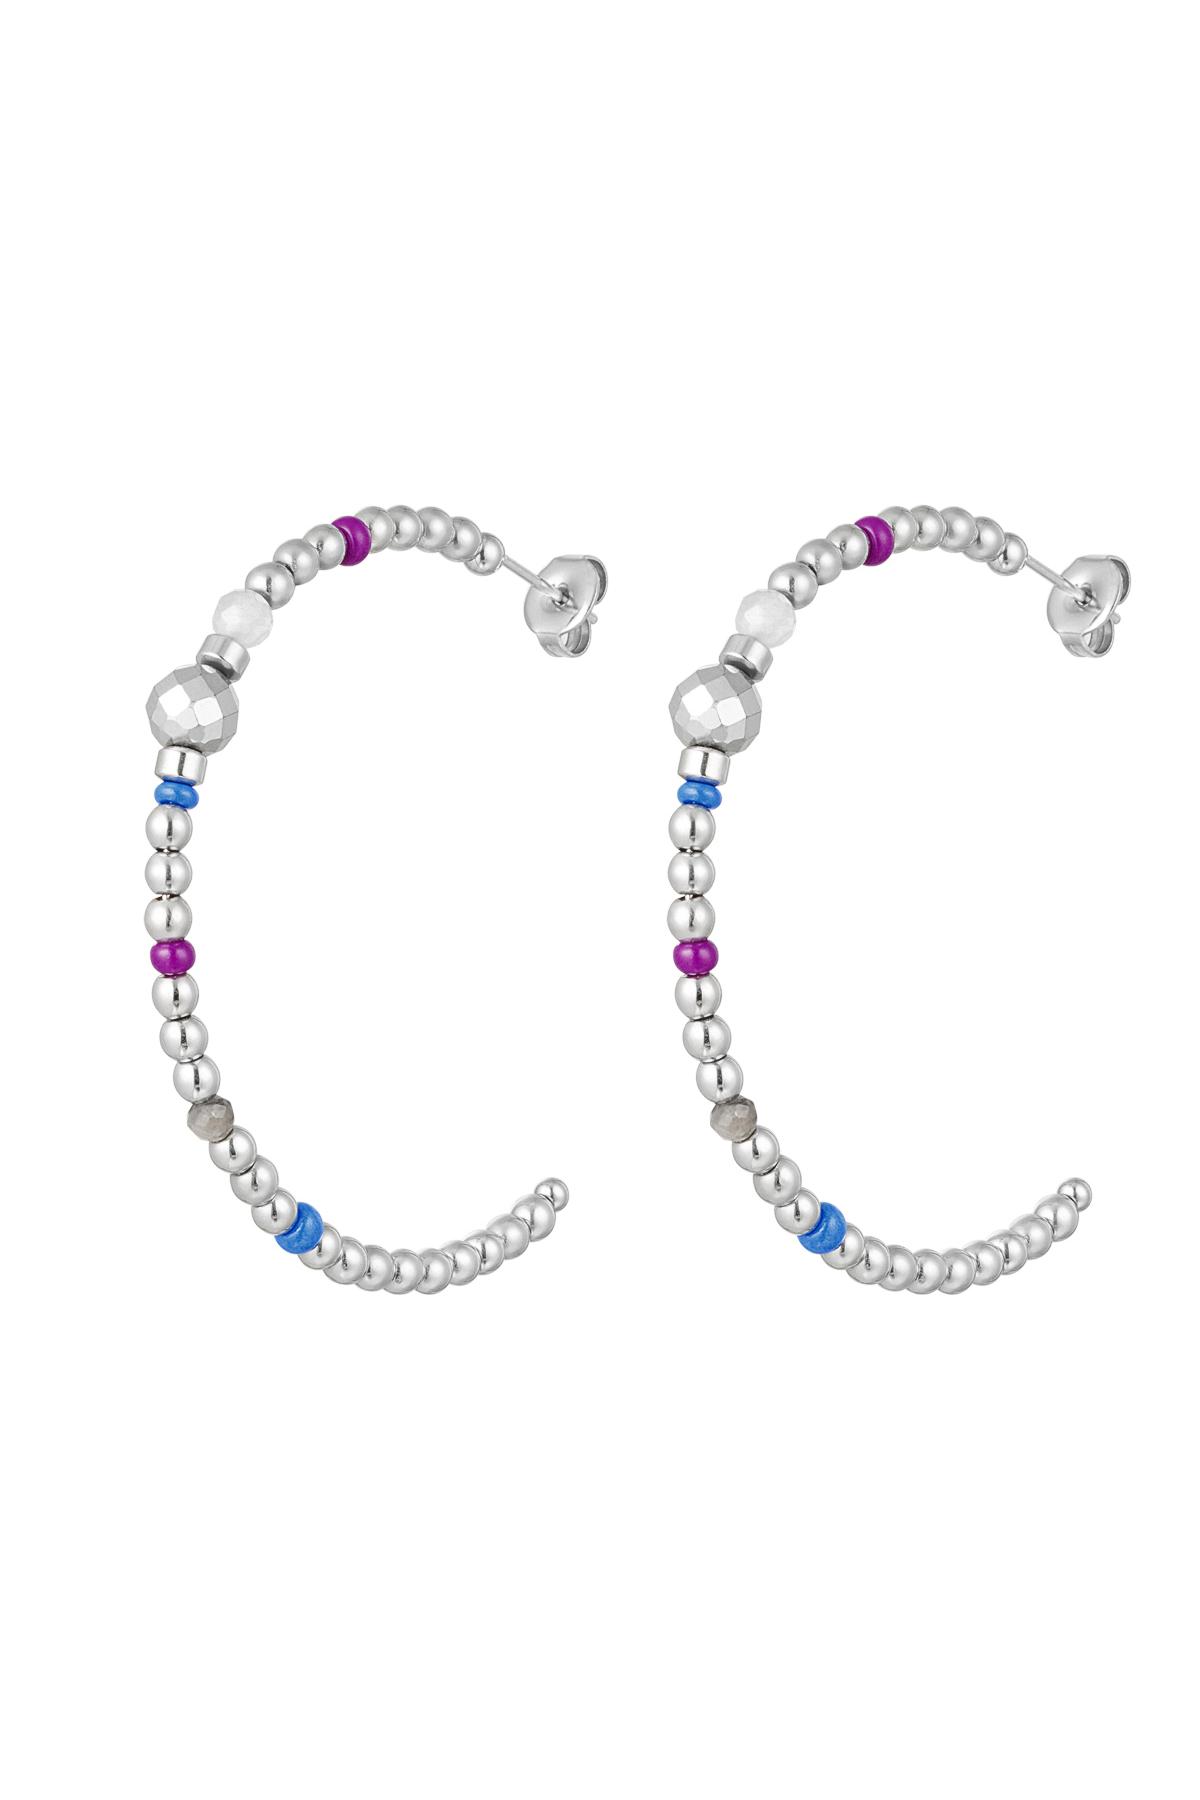 Earrings beads Silver Stainless Steel h5 